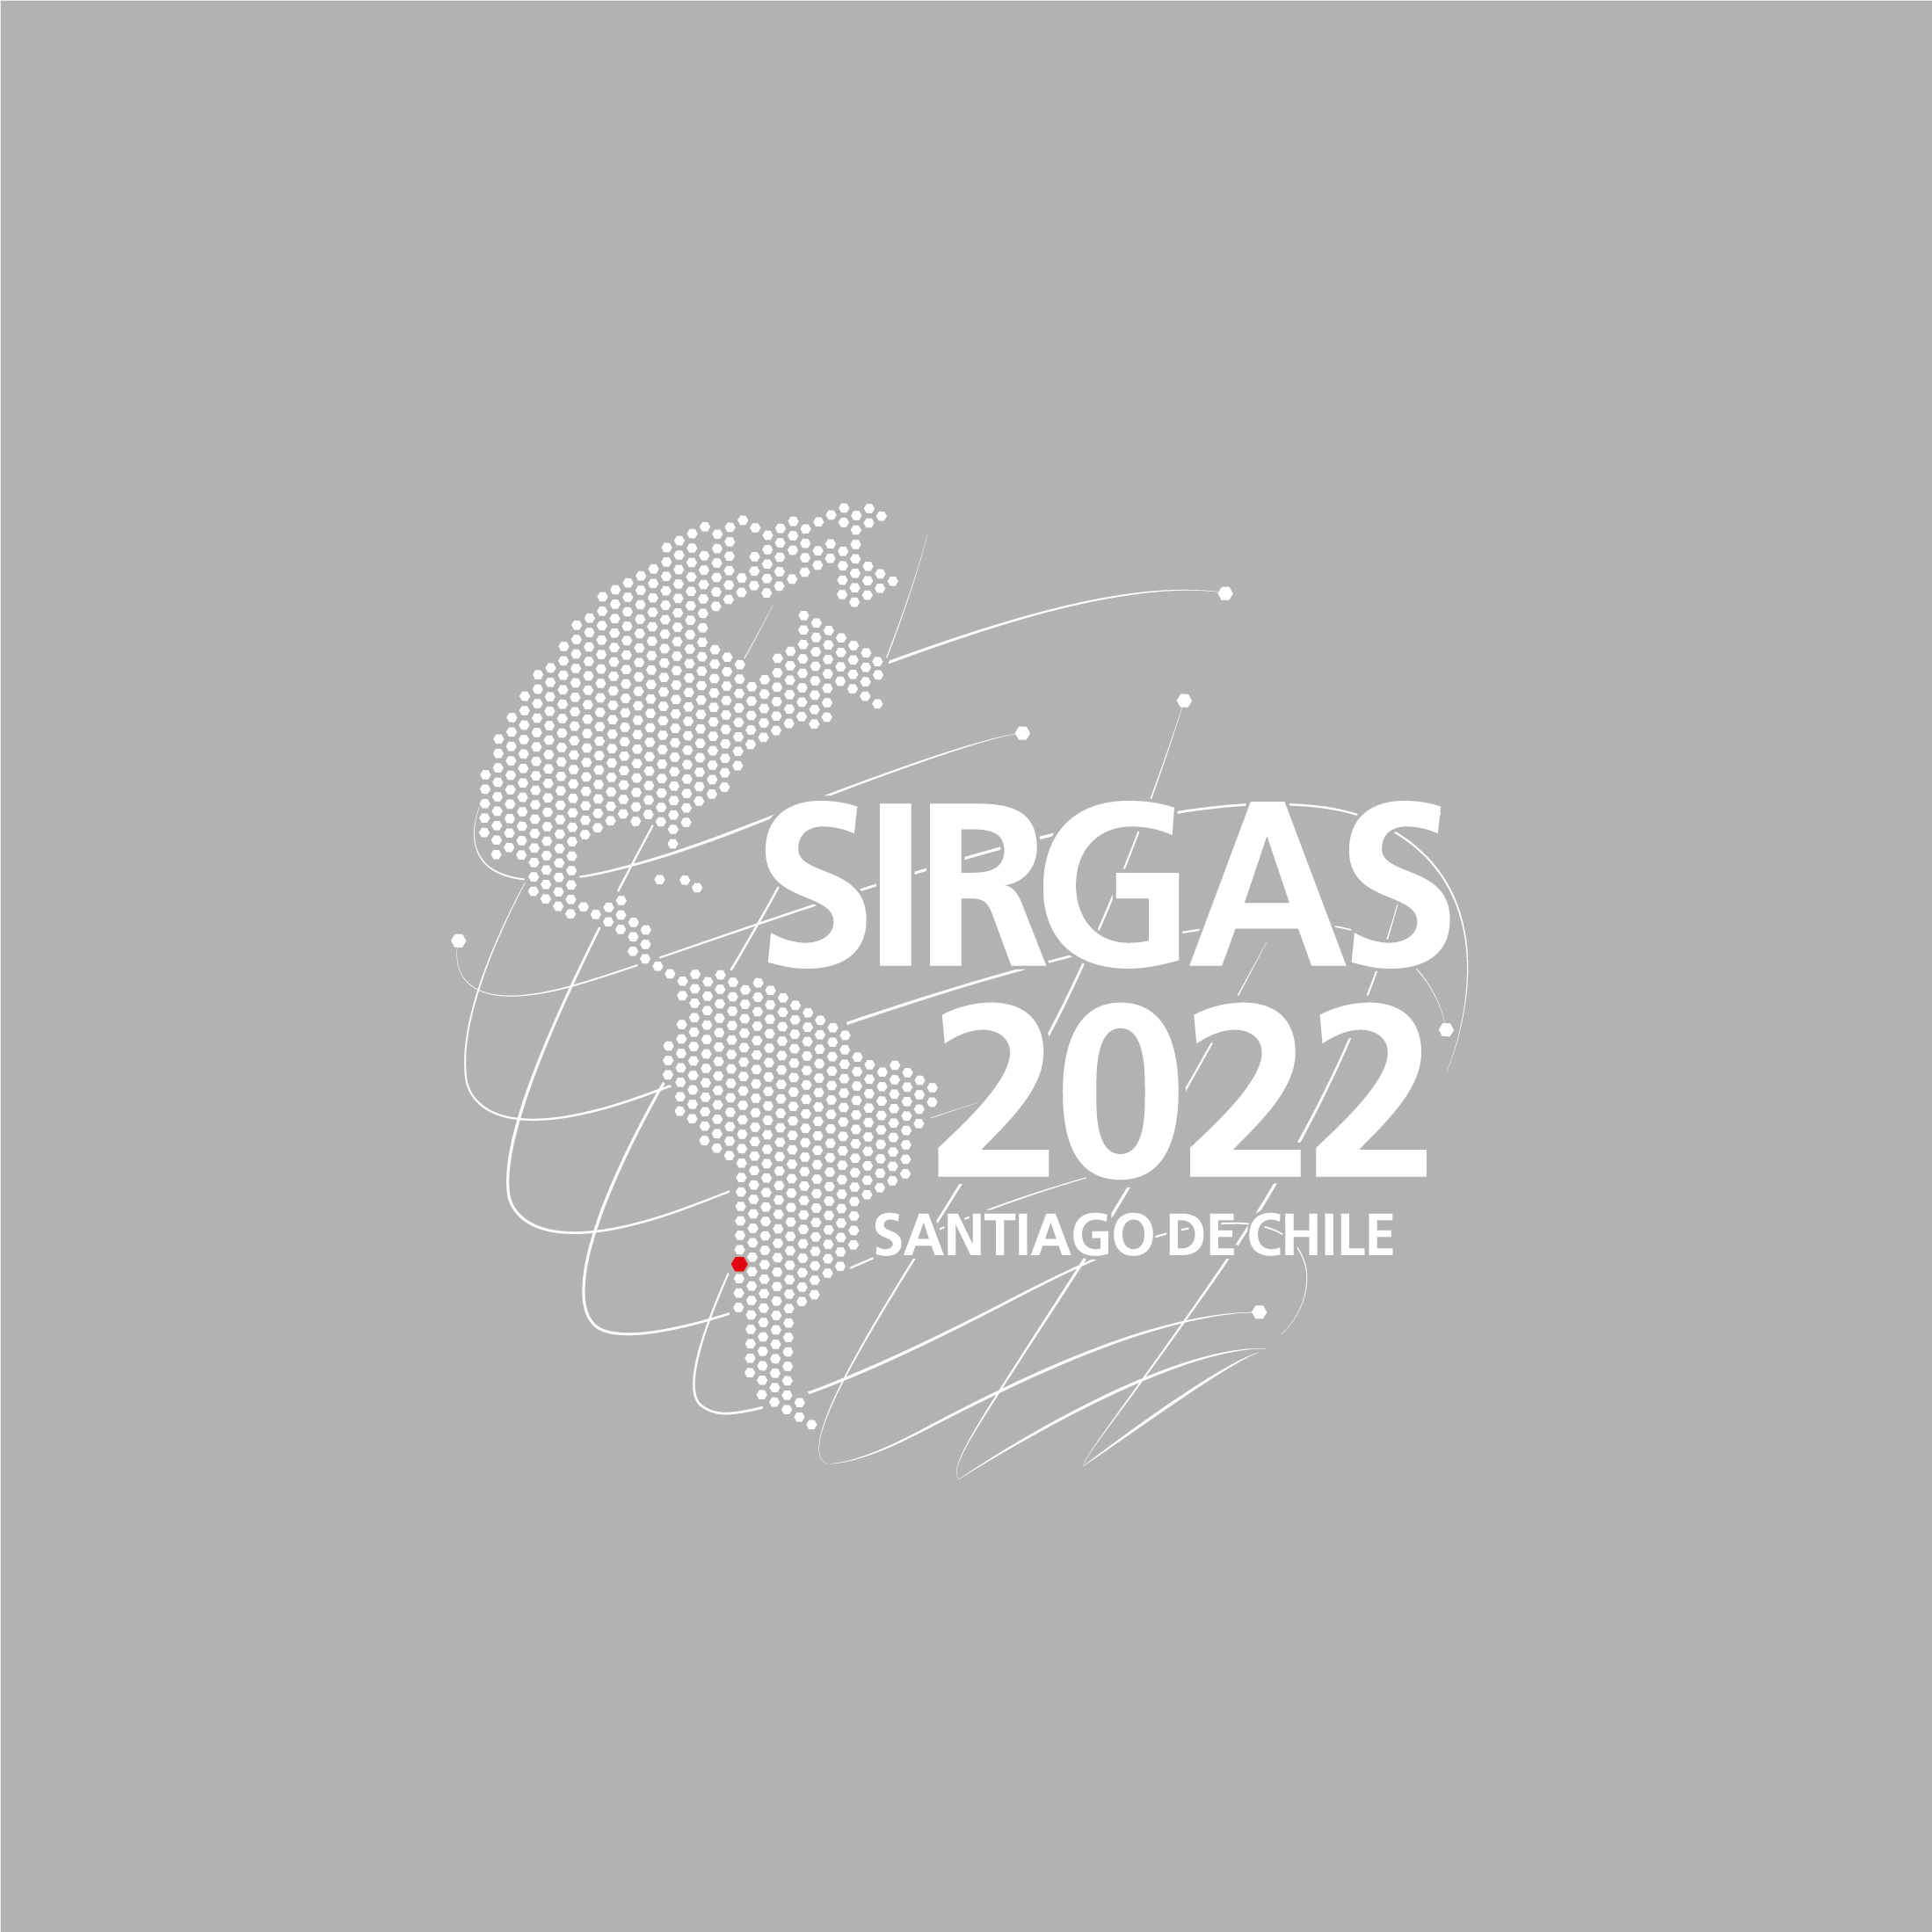 SIRGAS 2022 Symposium